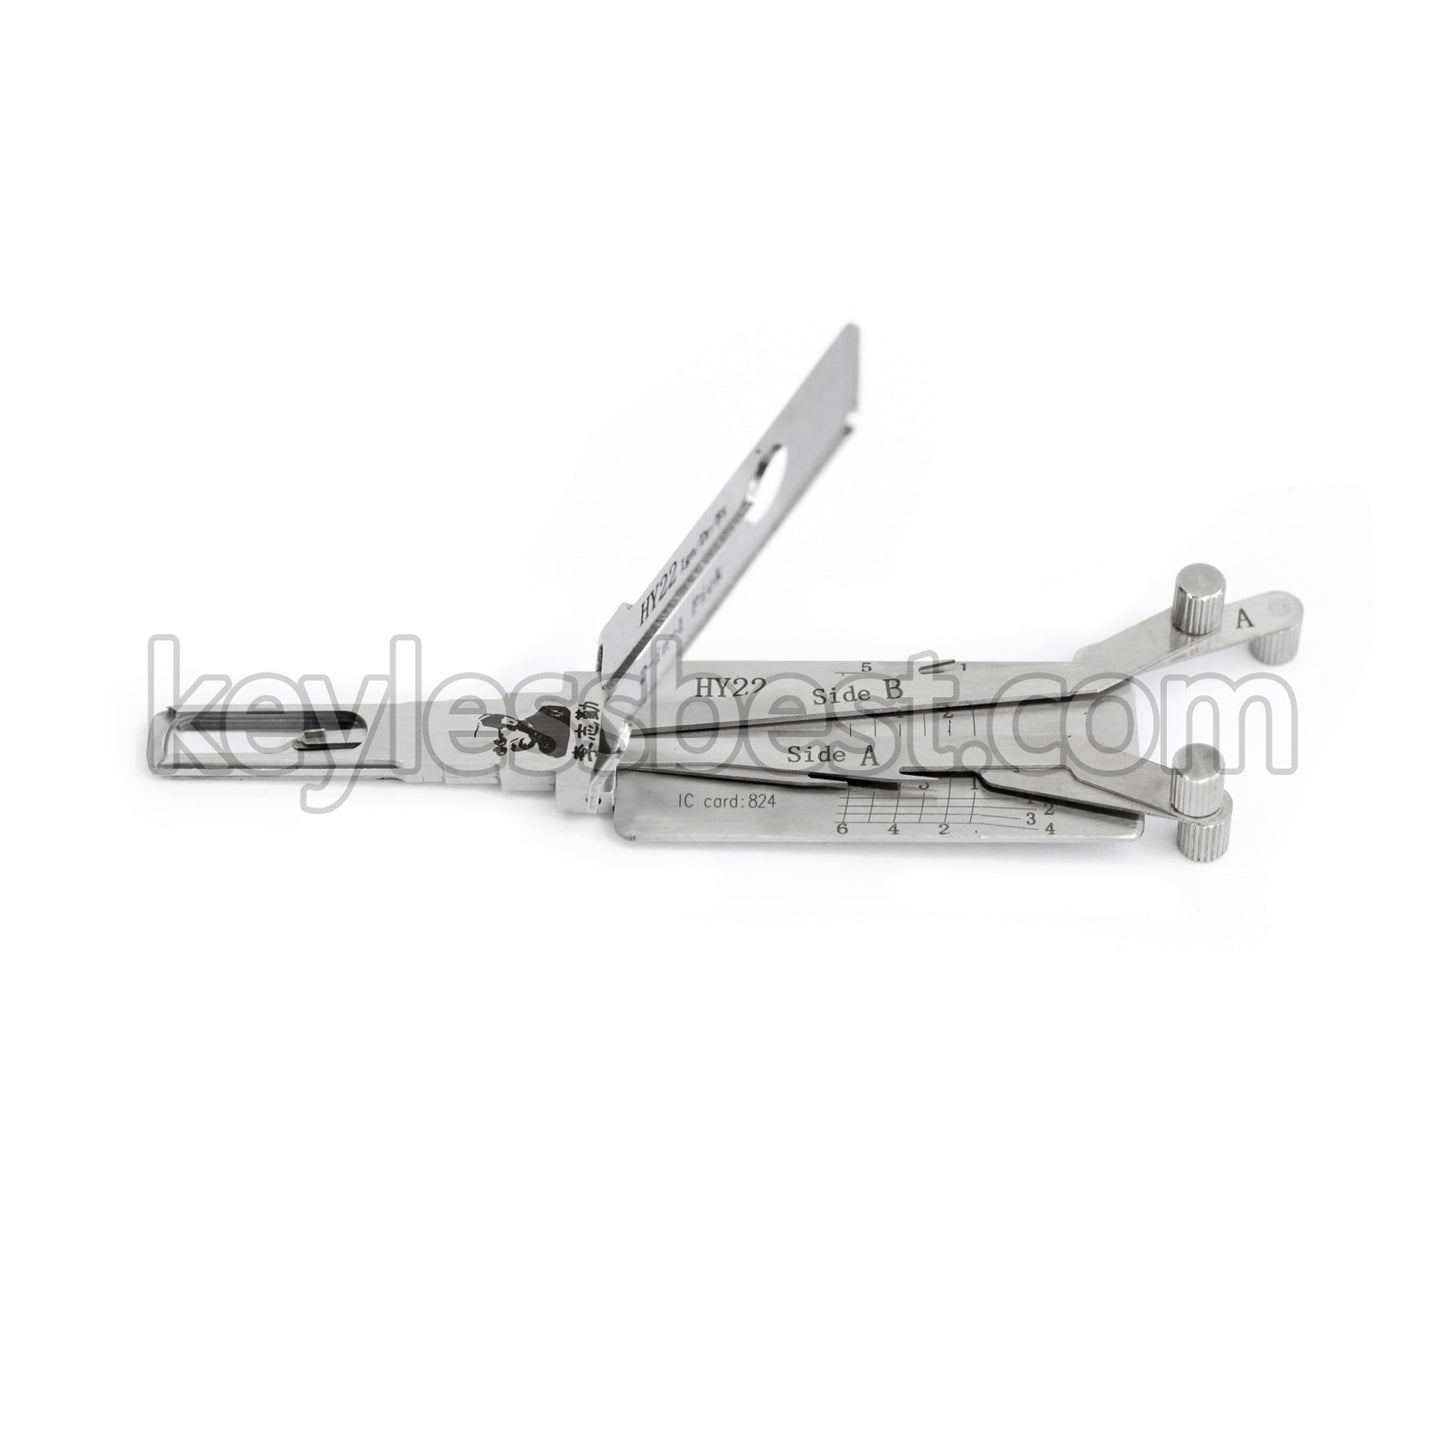 Original Lishi Tools HY22 2 in 1 locksmith tools lock pick For Door Lock Opener Professional Hand Tools